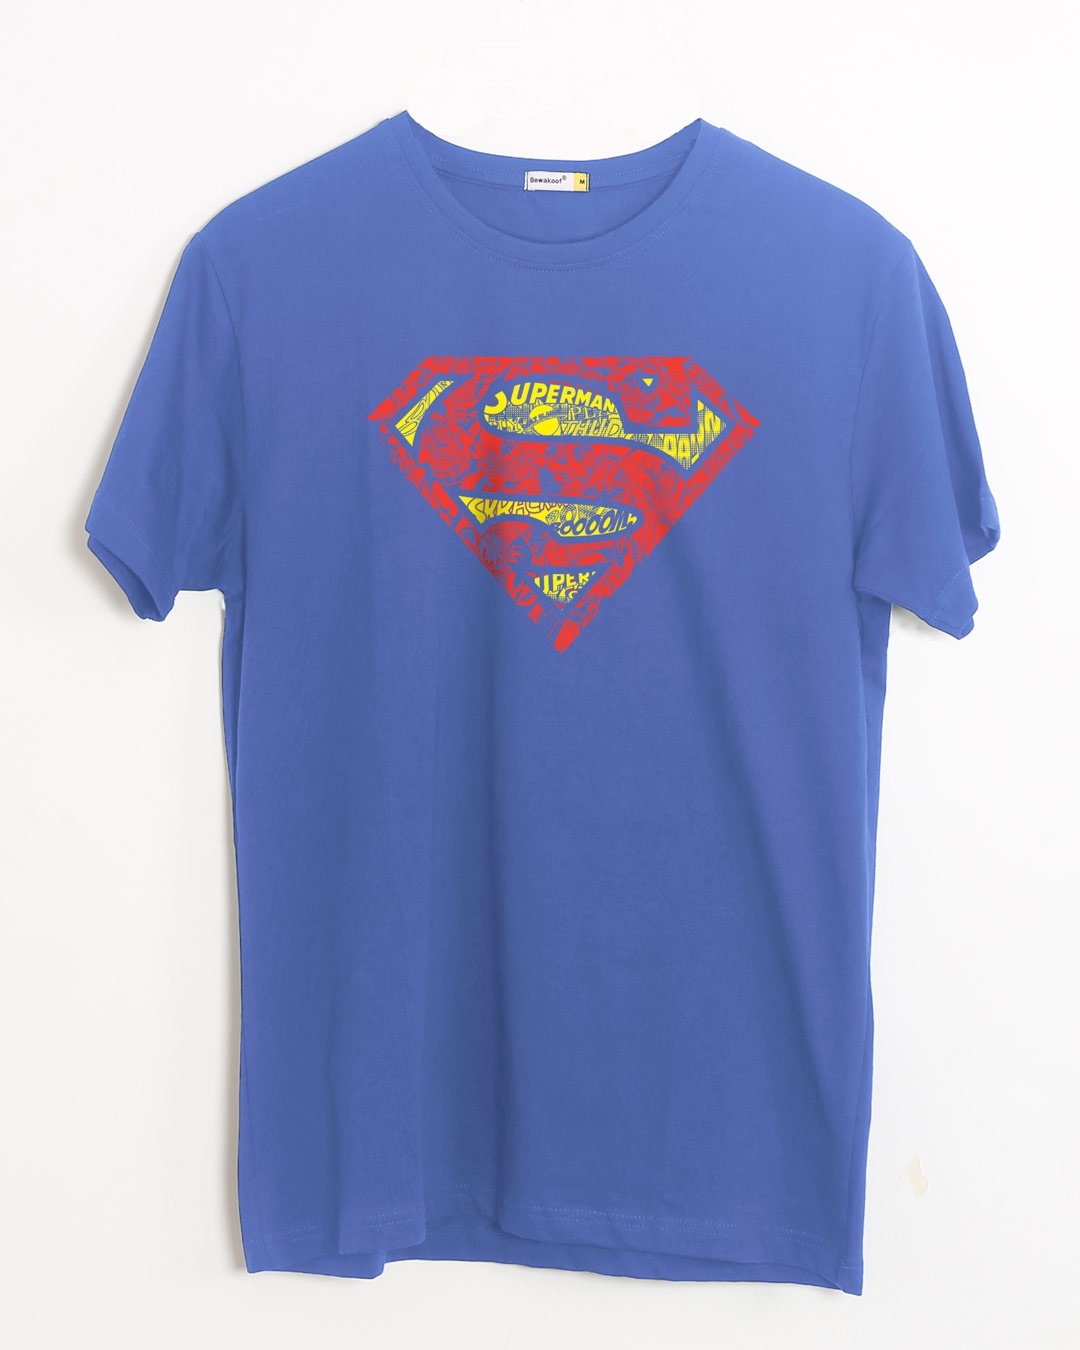 Shop Superman Doodle Half Sleeve T-Shirt (SL)